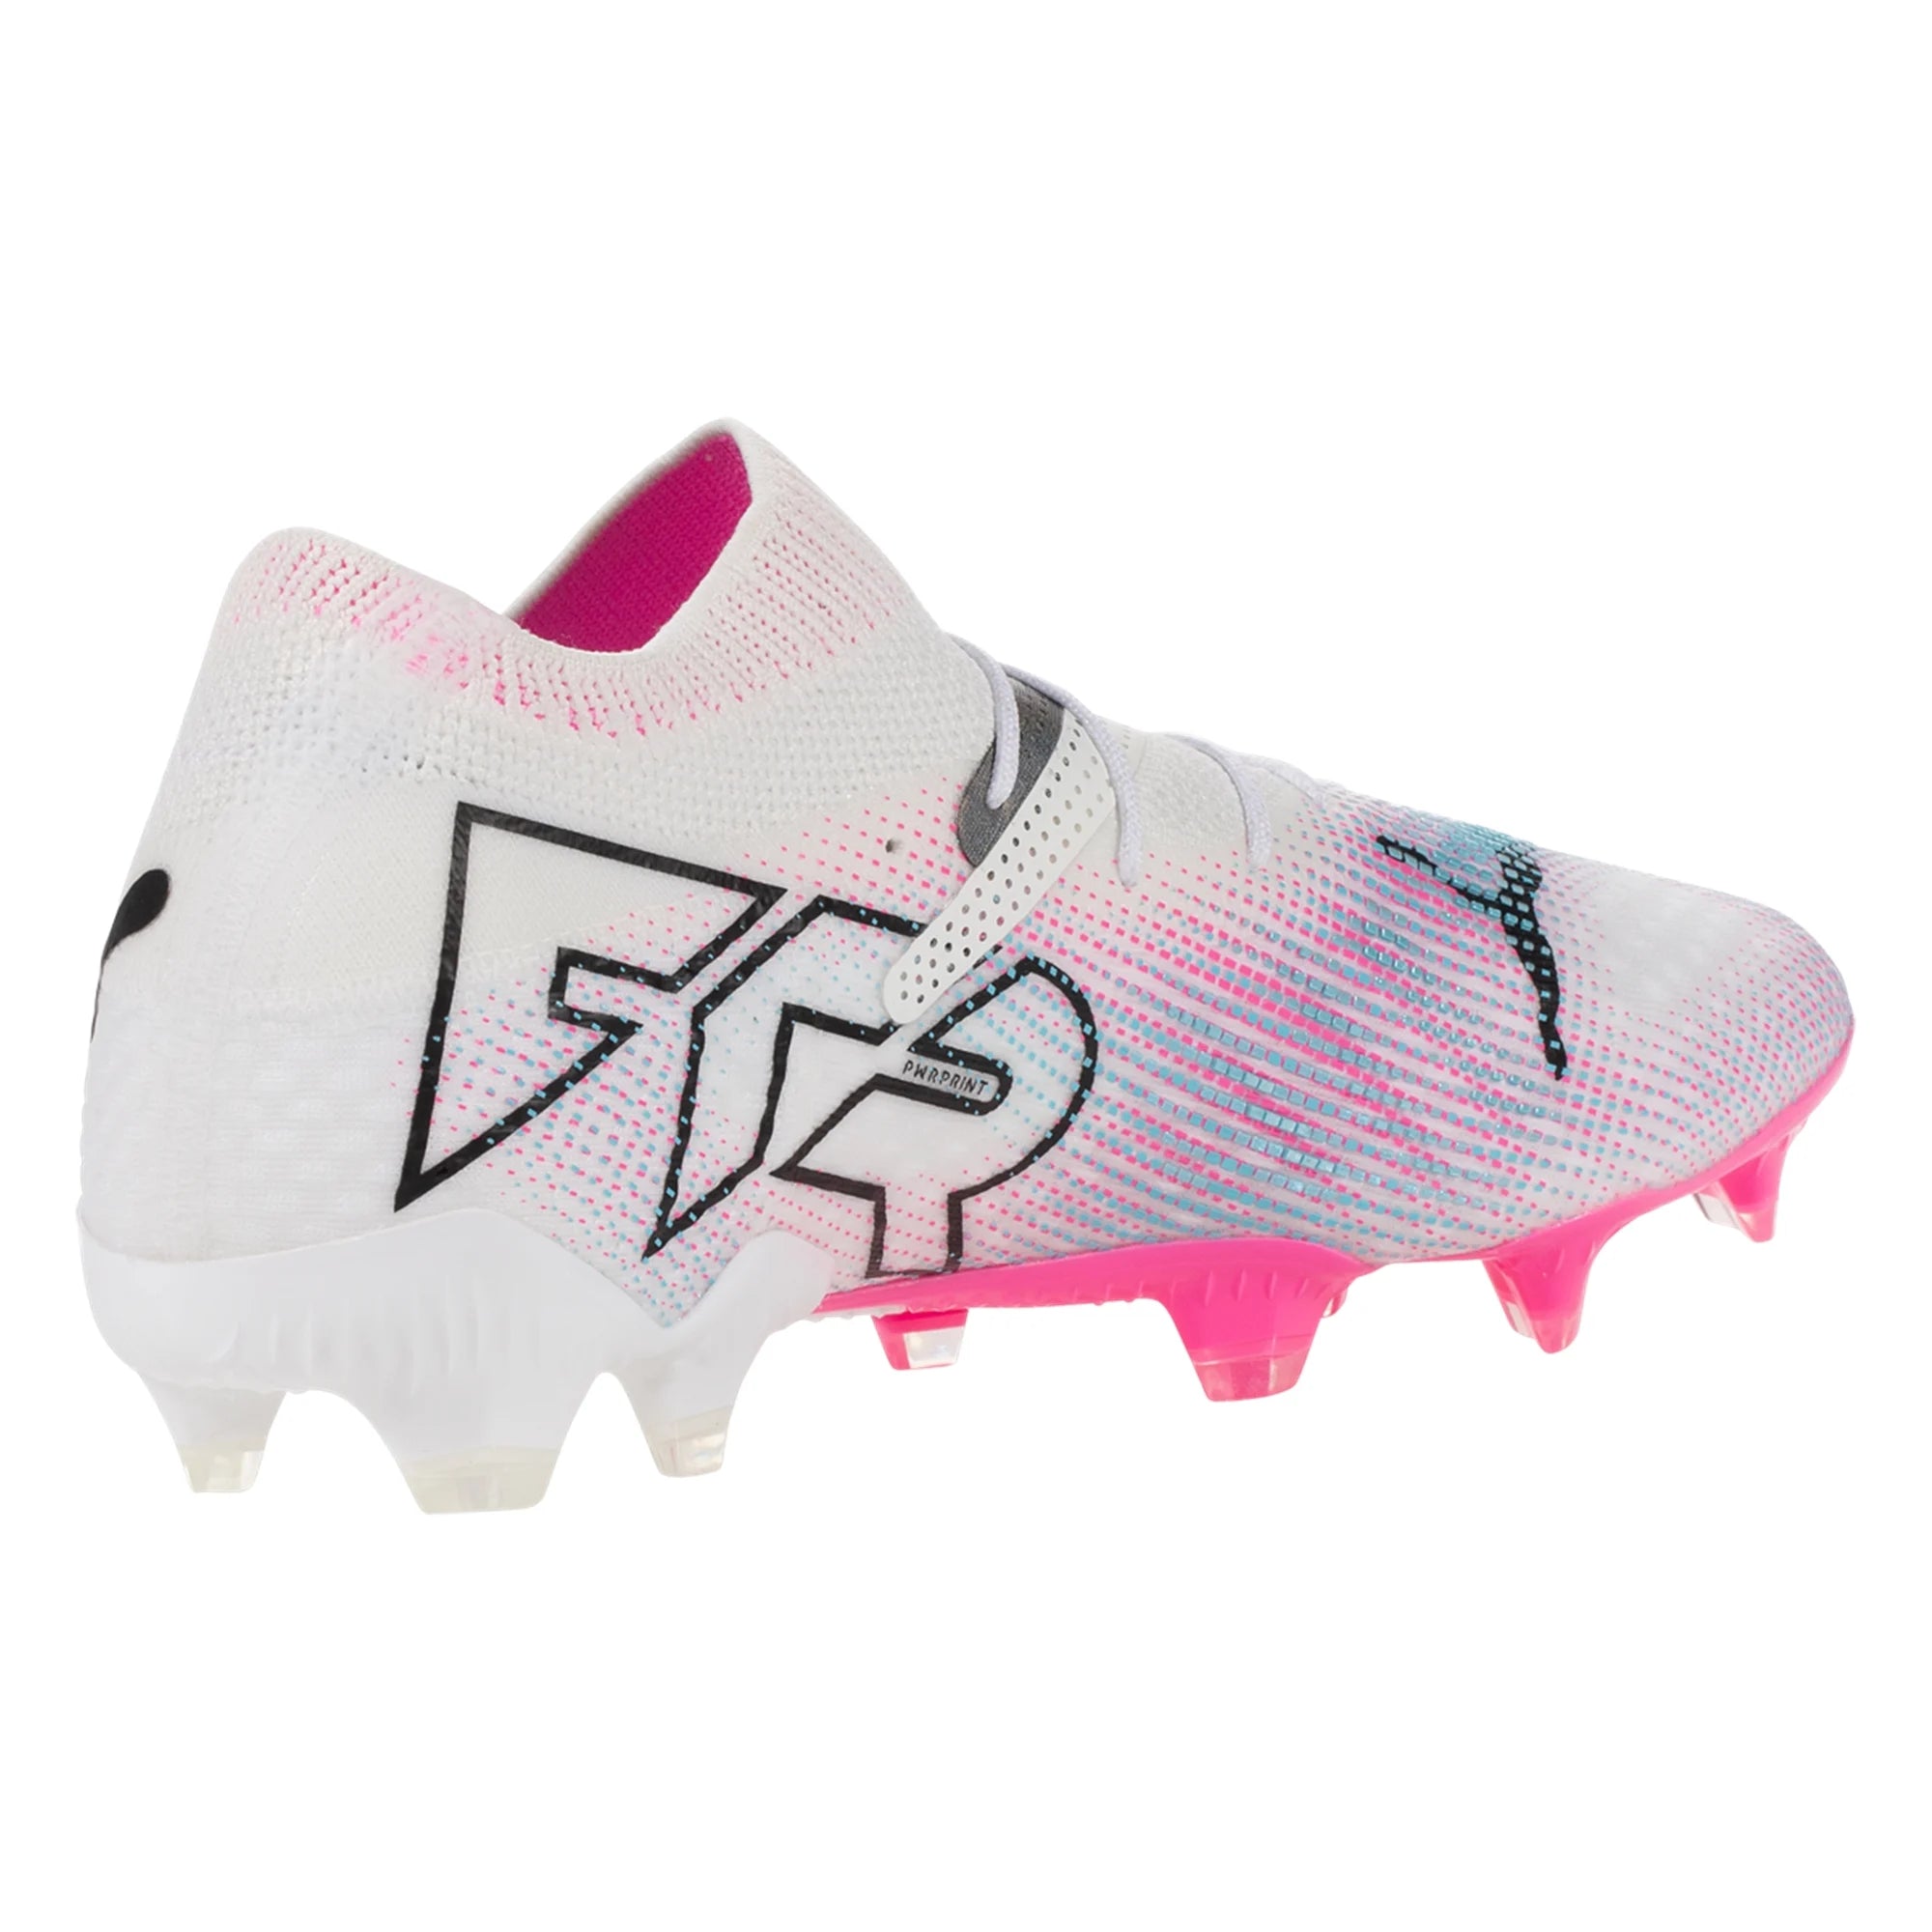 Puma Future Ultimate FG/AG-White/Black/Poison Pink